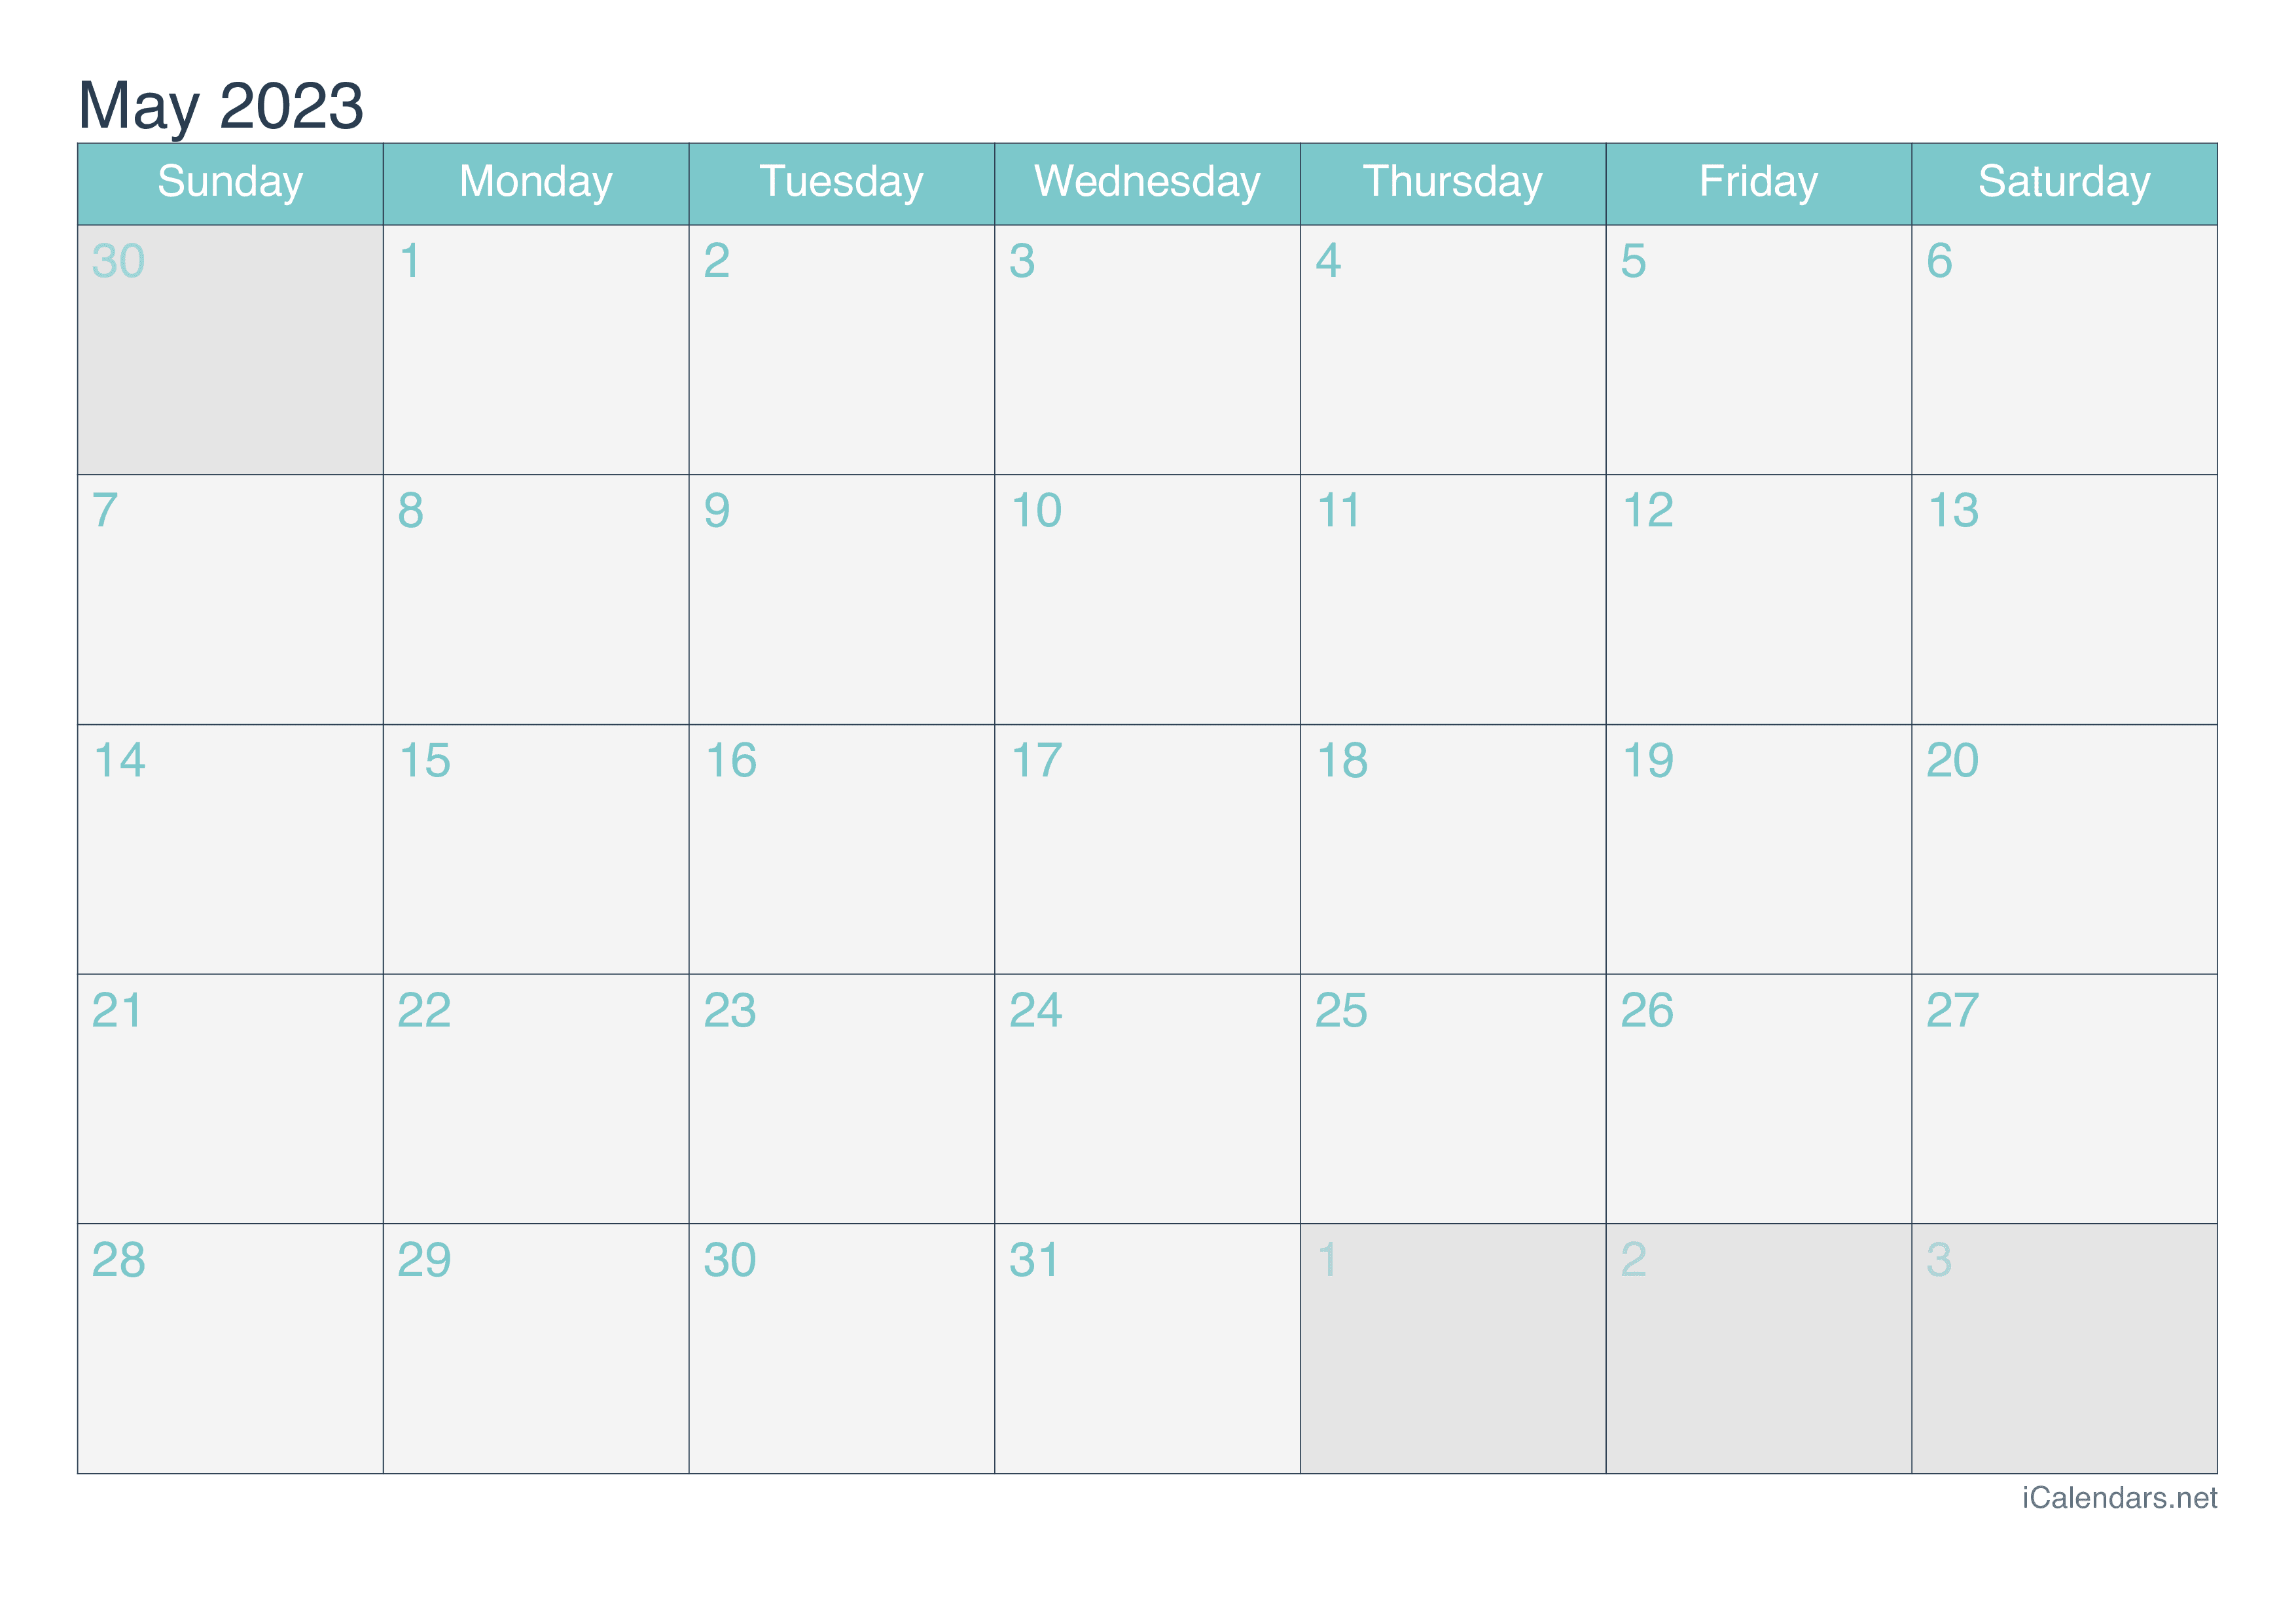 May 2023 Calendar Free Printable Calendar Download Printable May 2023